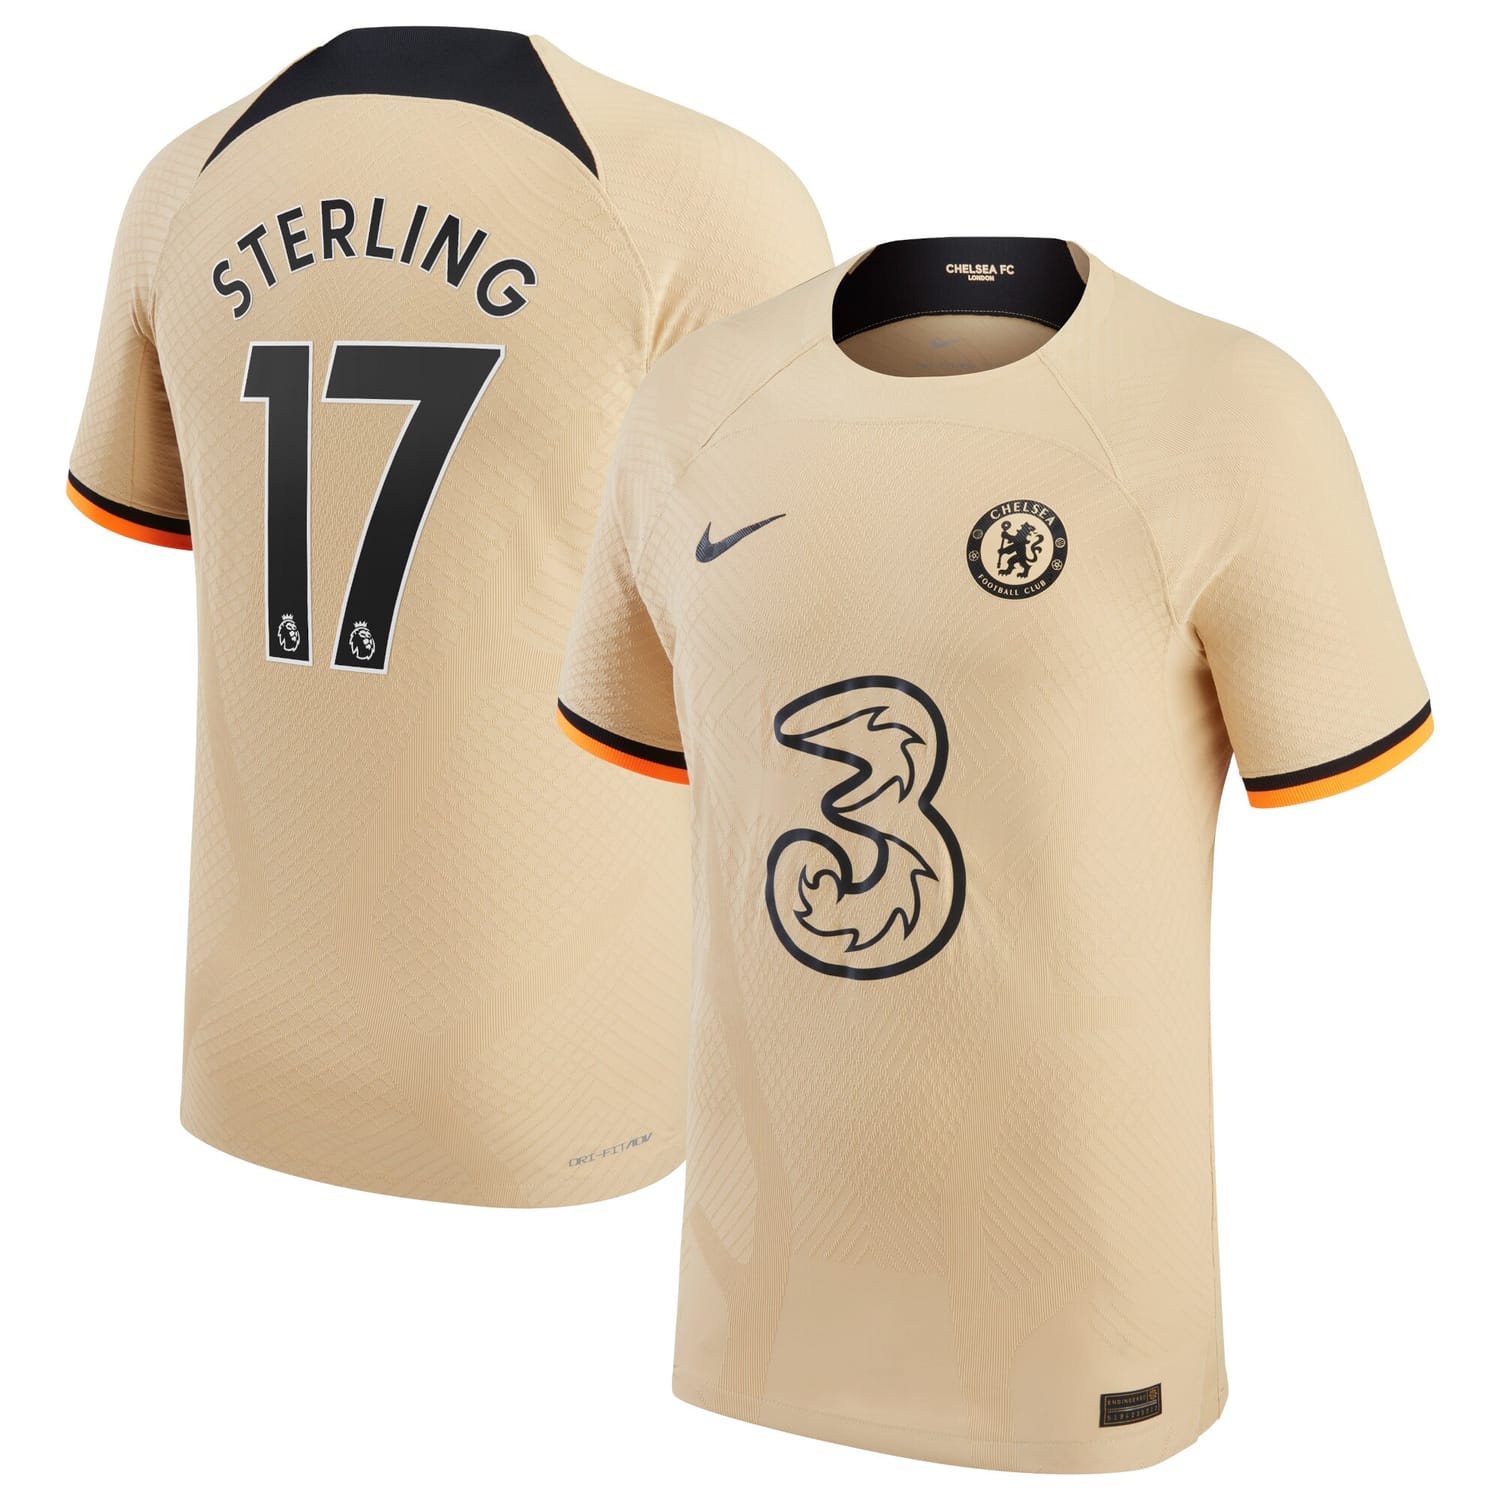 Premier League Chelsea Third Authentic Jersey Shirt 2022-23 player Raheem Sterling 17 printing for Men